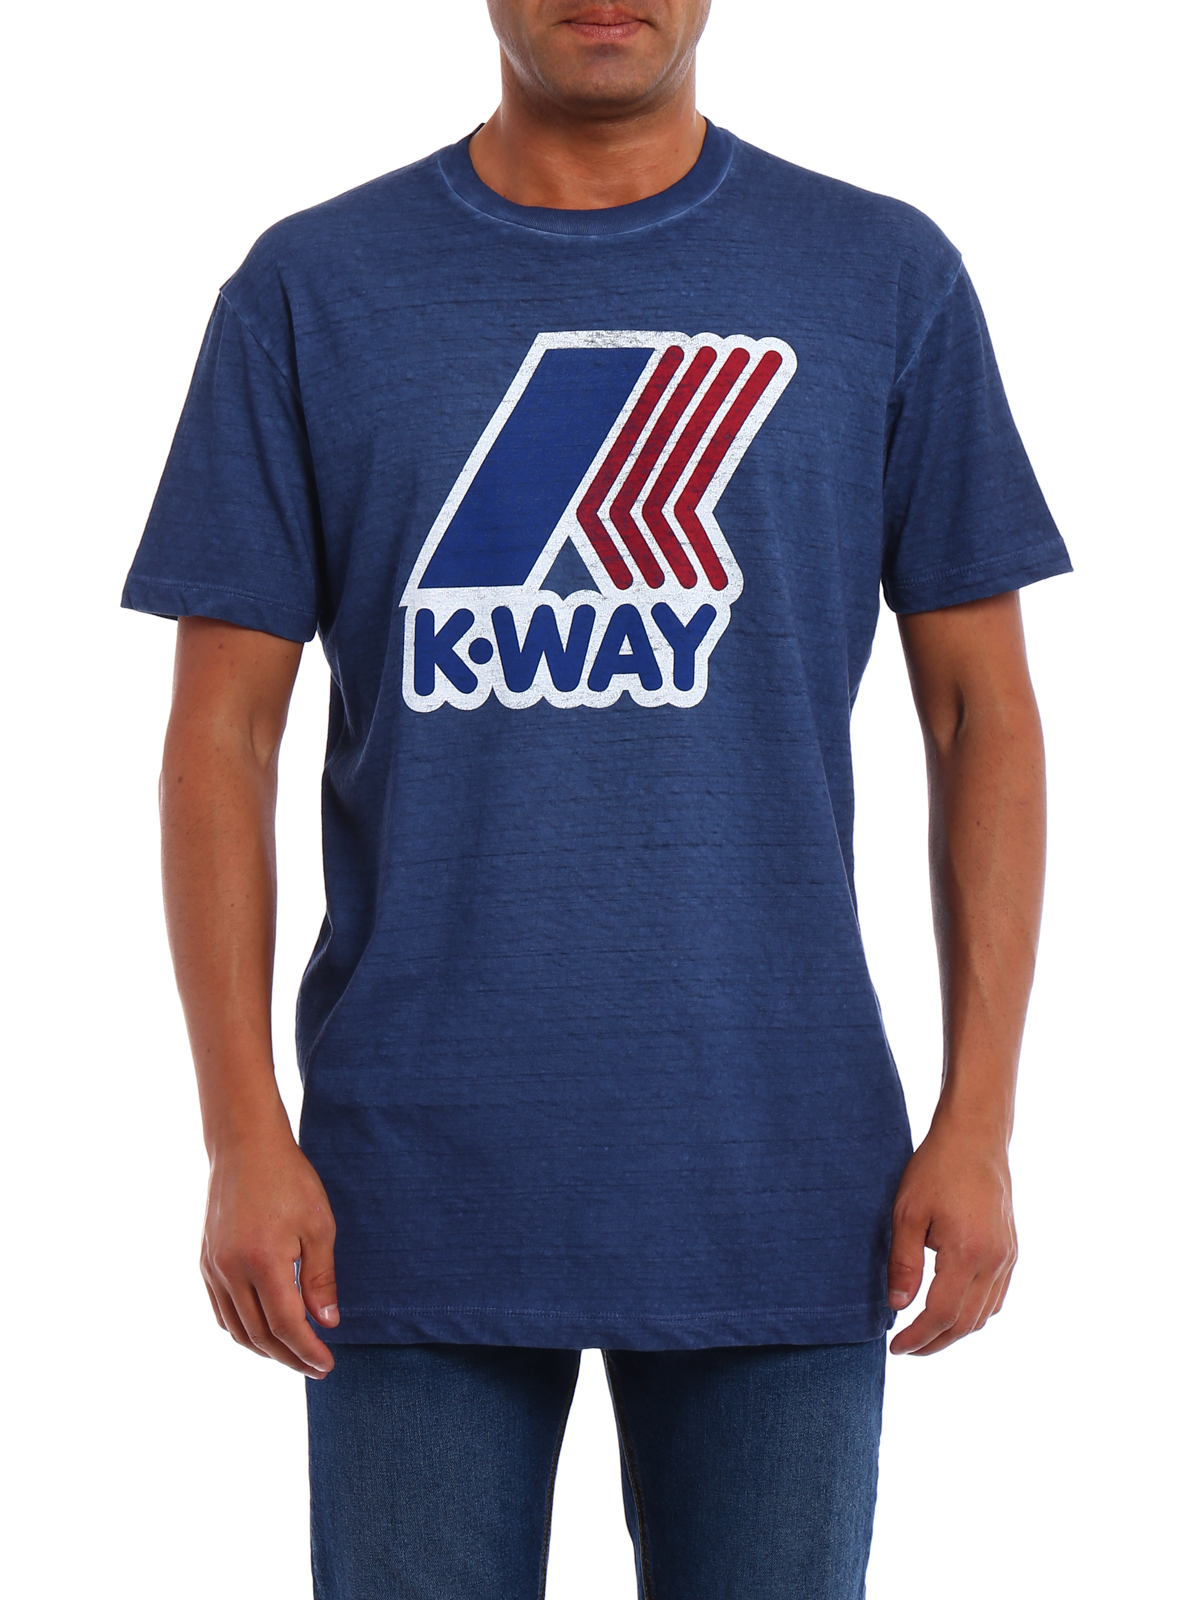 Way collection. Футболка Kussia. K-way бренд чей. Judo t Shirt.